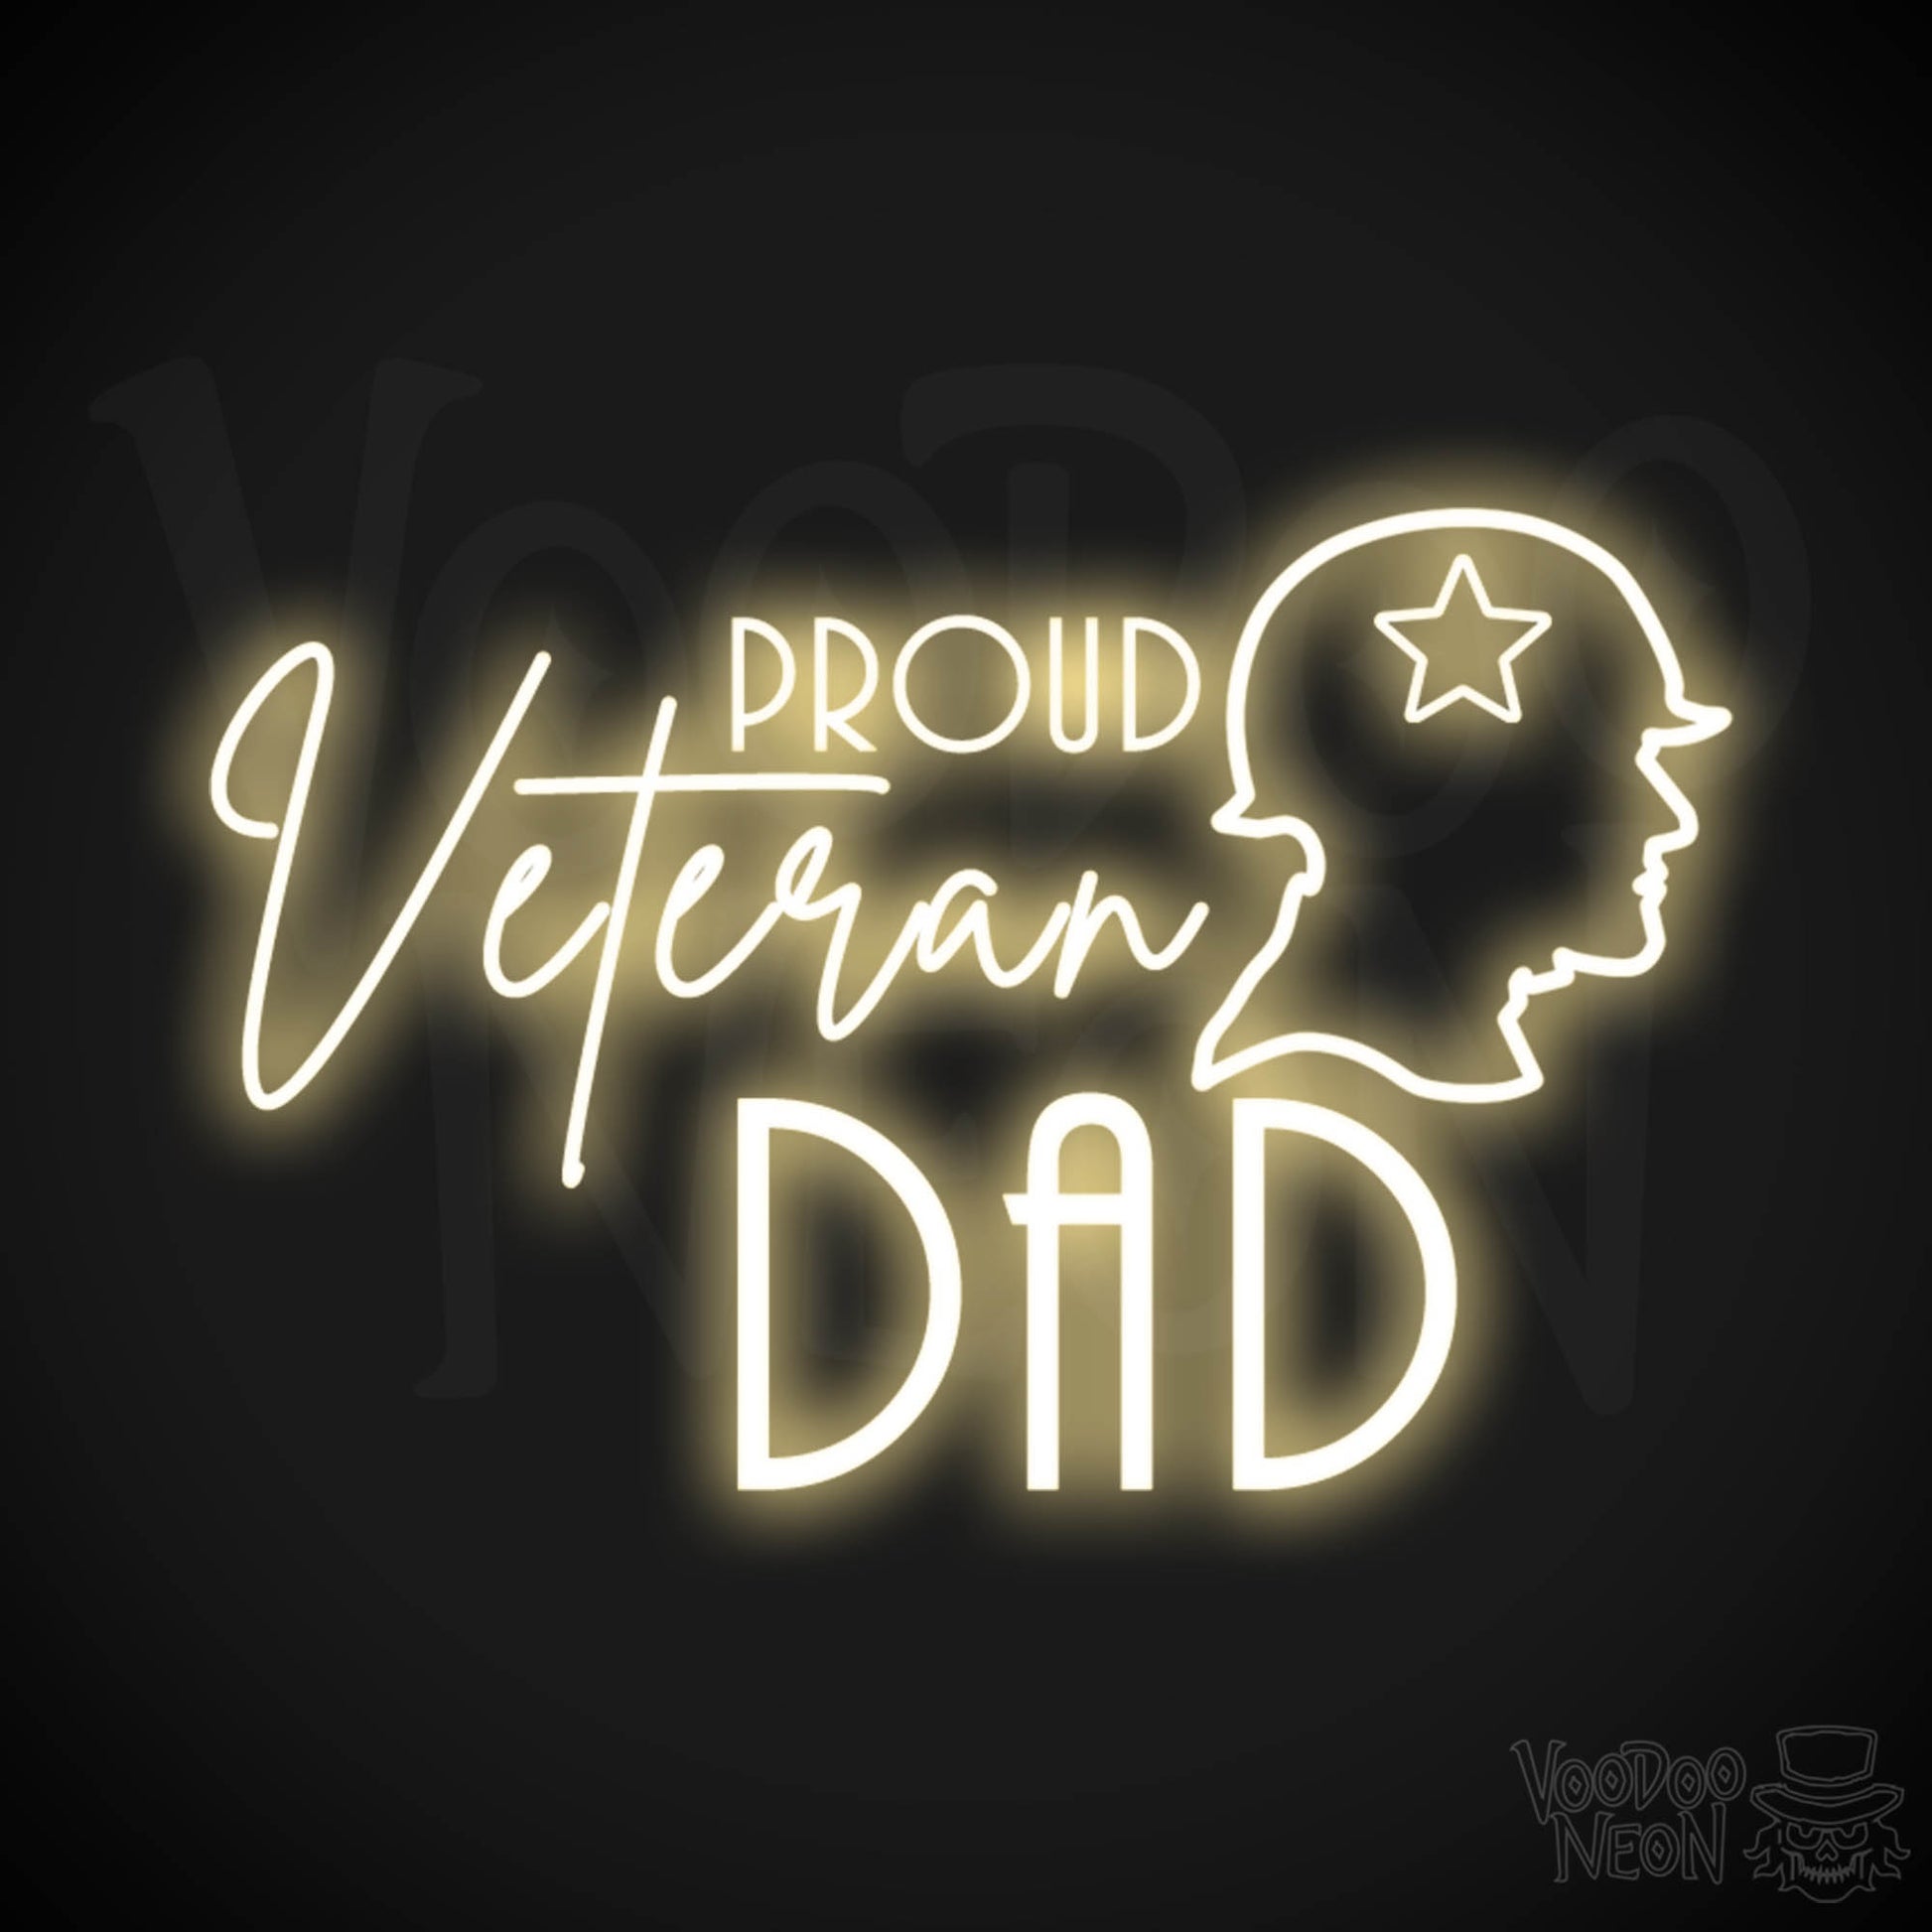 Proud Veteran Dad Neon Sign - Proud Veteran Dad Sign - Neon Veteran Wall Art - Color Warm White